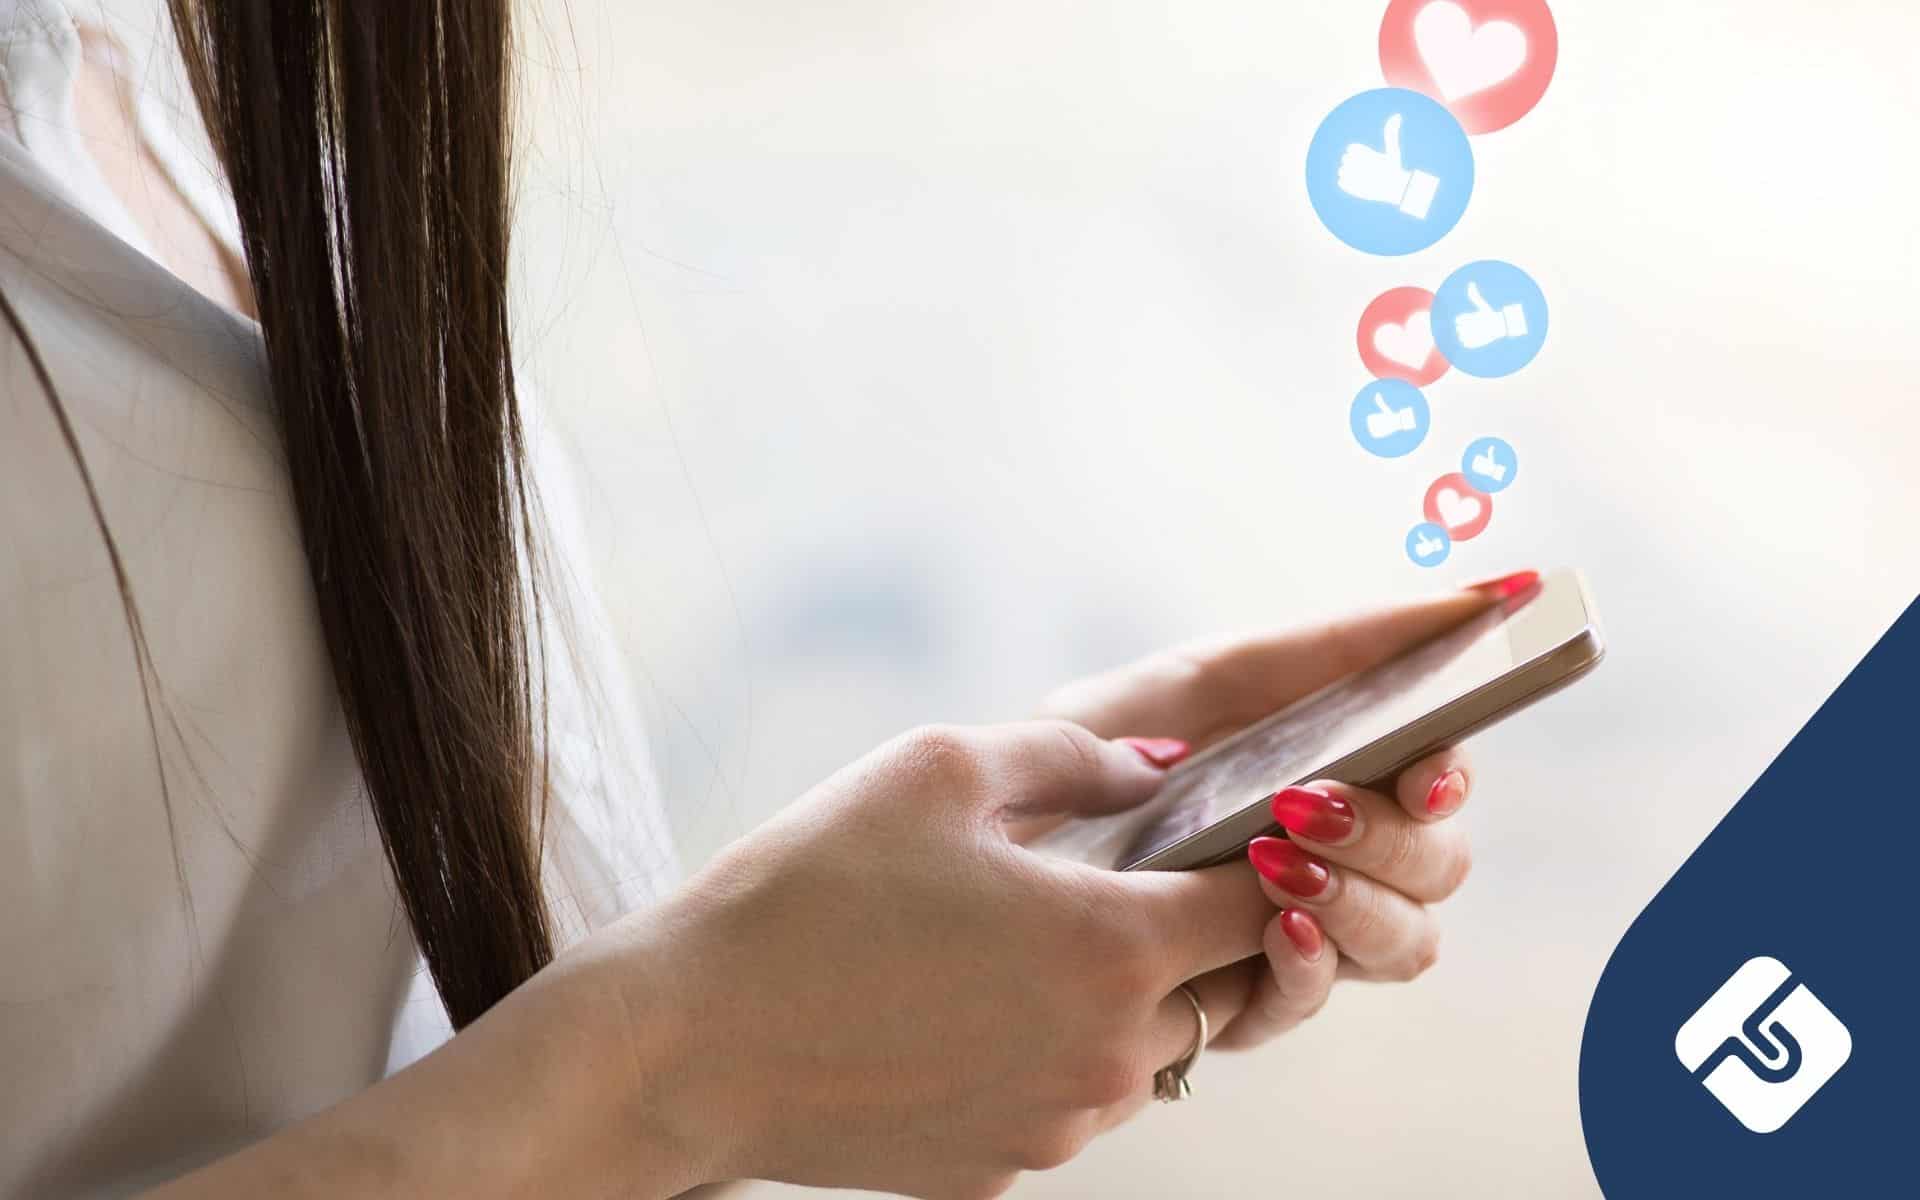 Content Moderation: Should Social Media Platforms Moderate More?